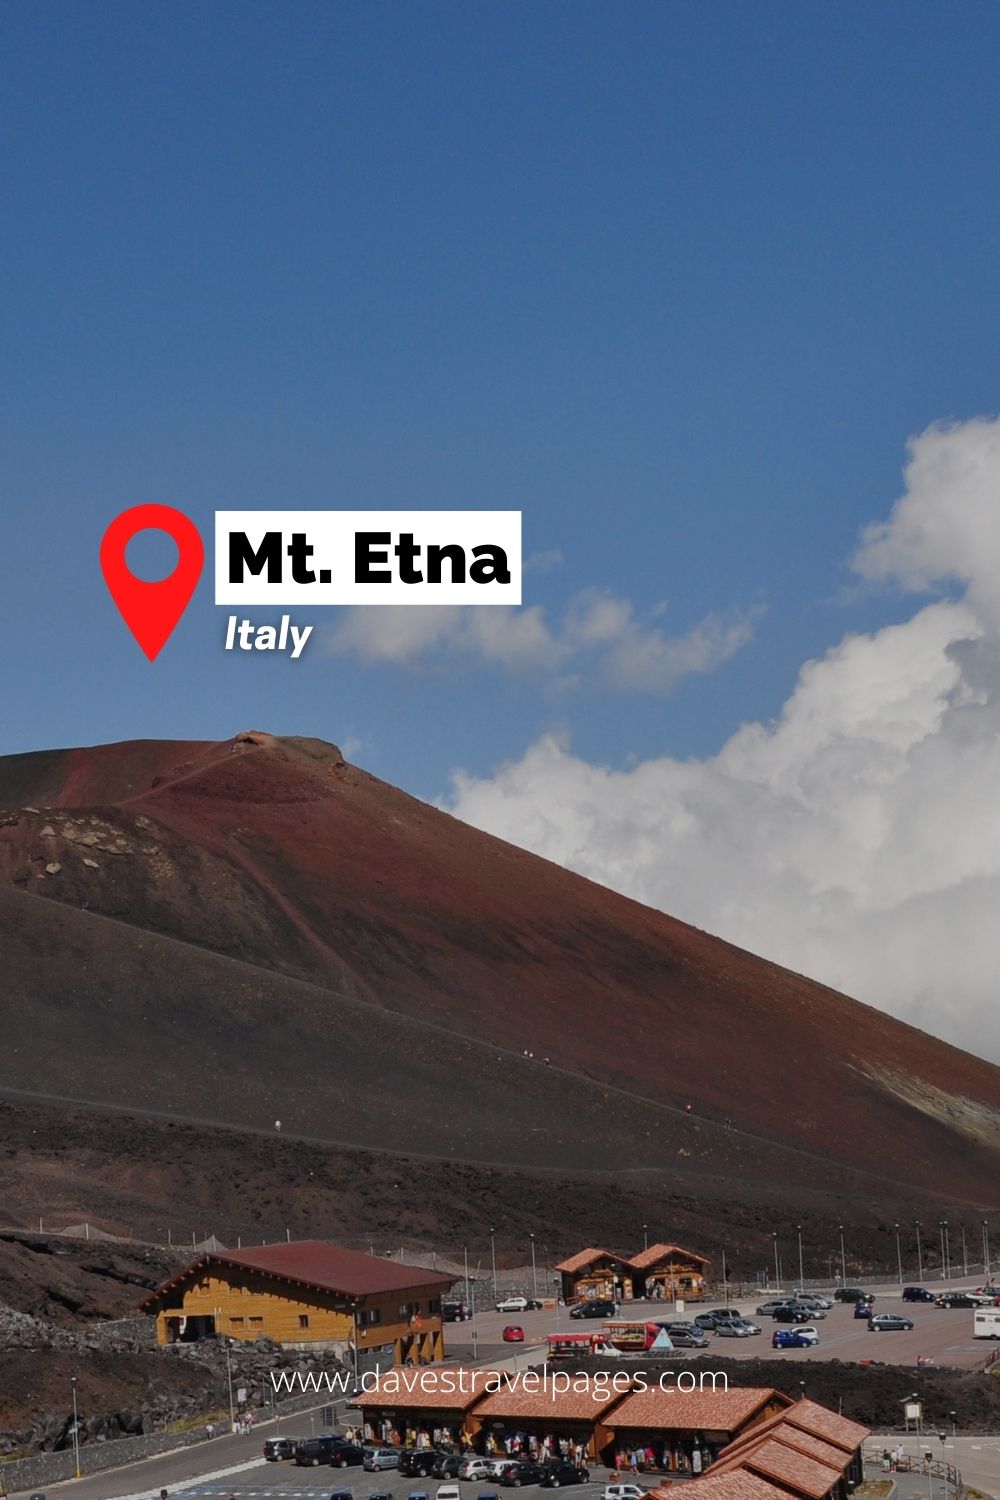 Mount Etna in Italy